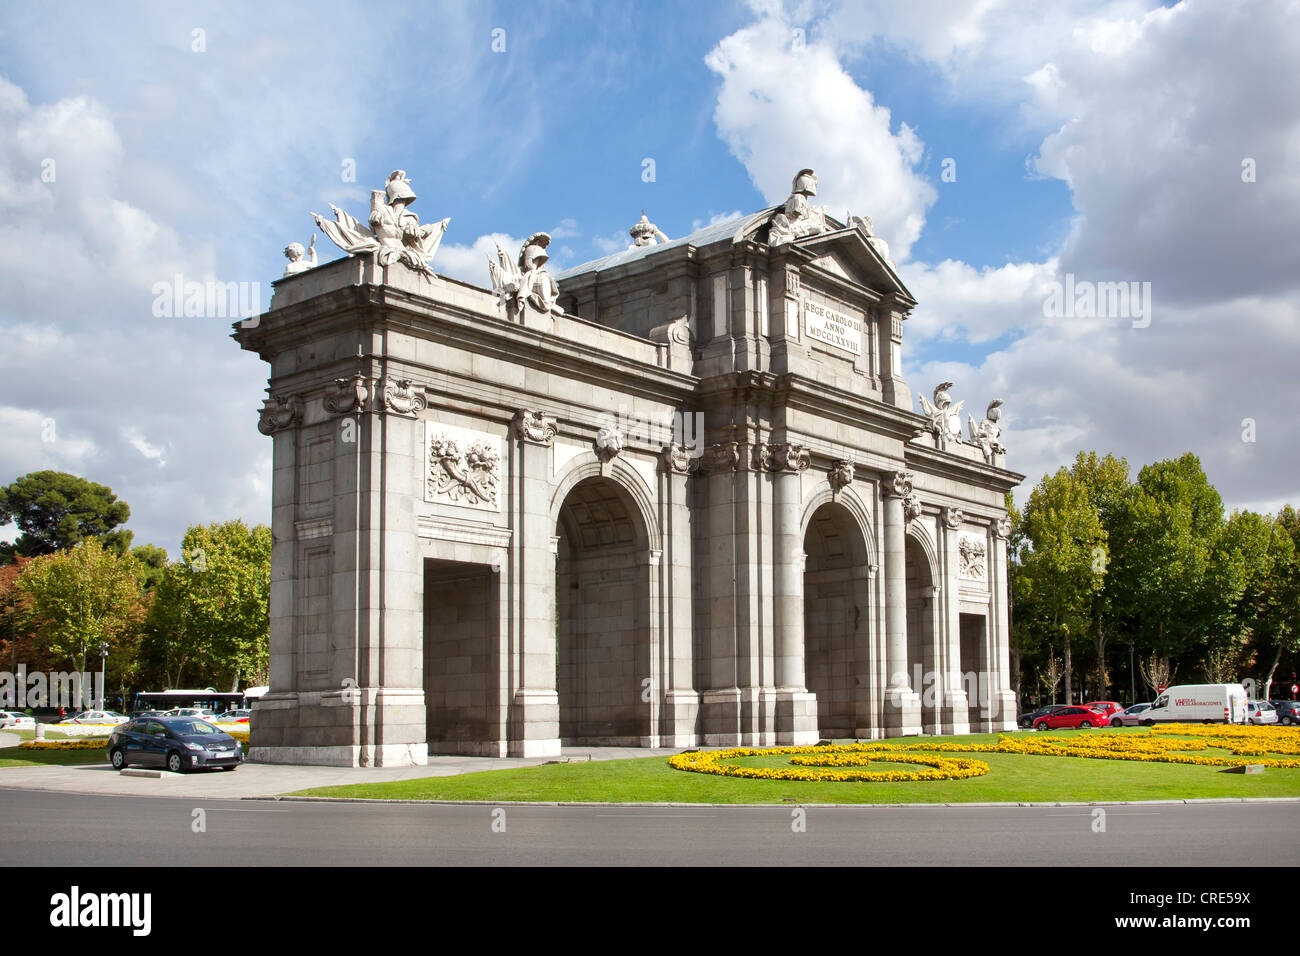 Puerta de Alcala arco su Plaza de la Independencia square, Madrid, Spagna, Europa Foto Stock